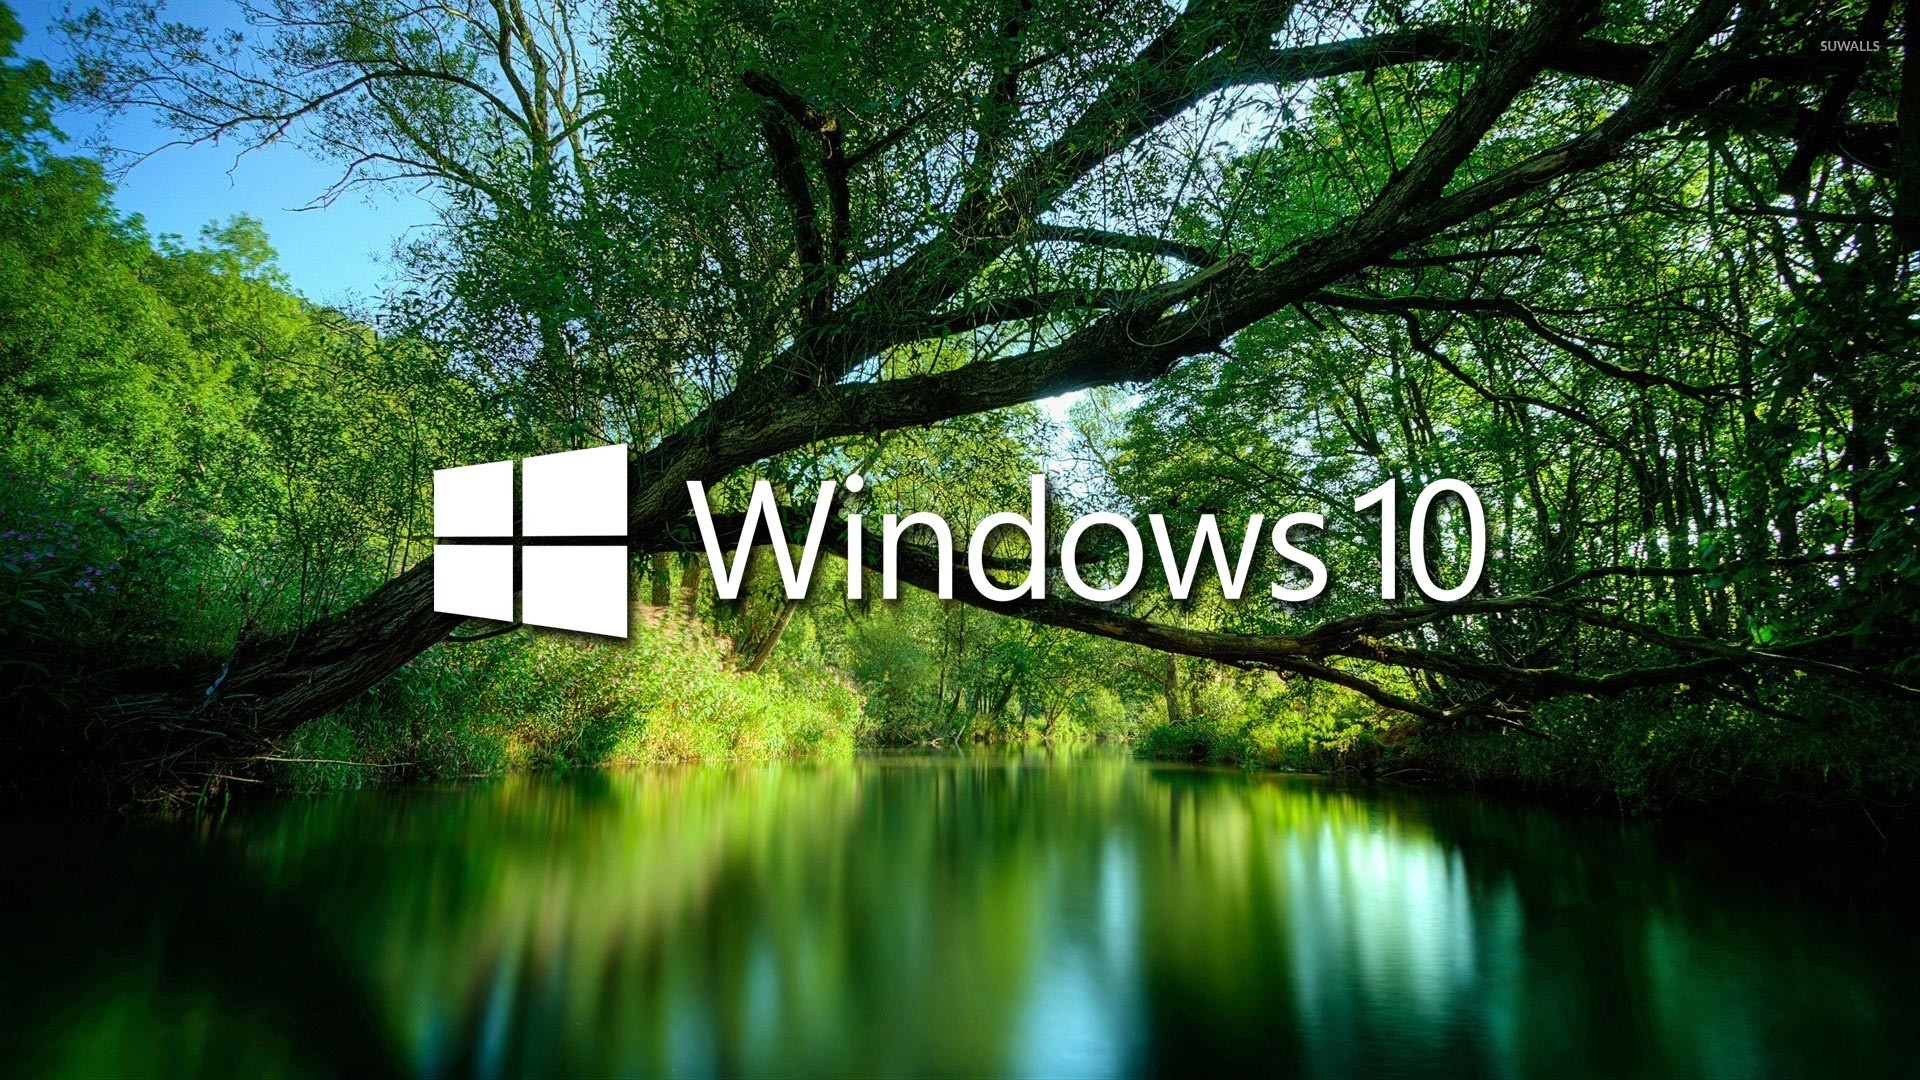 1920x1080 Windows 10 over a green lake white text logo wallpaper  jpg